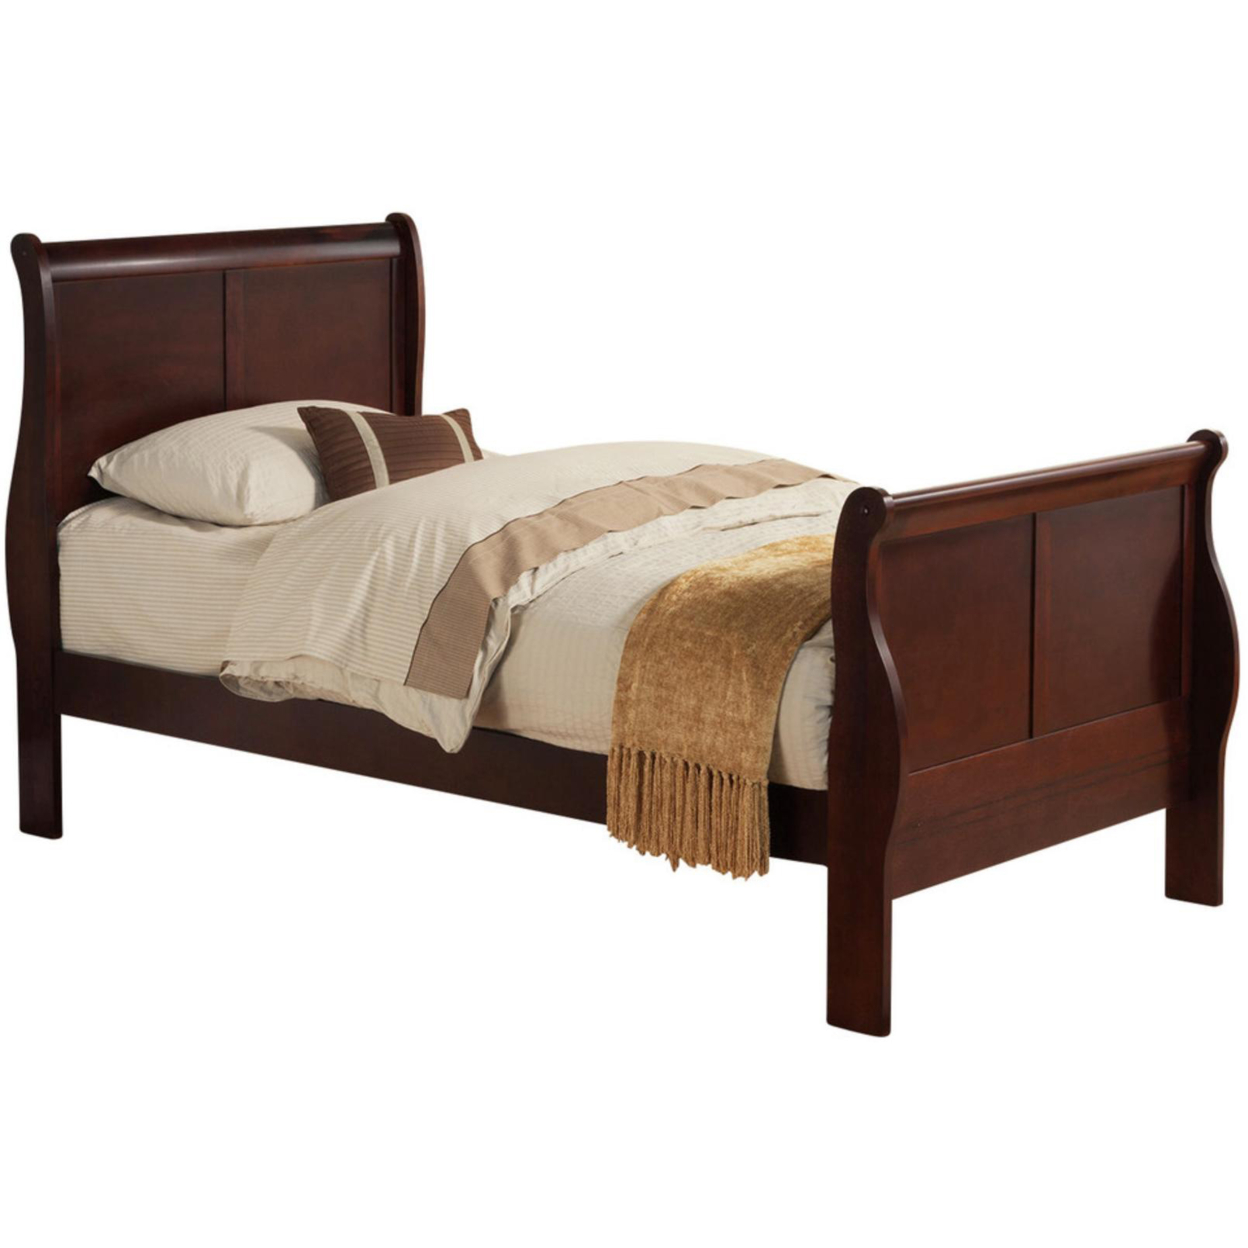 Transitional Panel Design Sleigh Twin Size Bed, Cherry Brown- Saltoro Sherpi